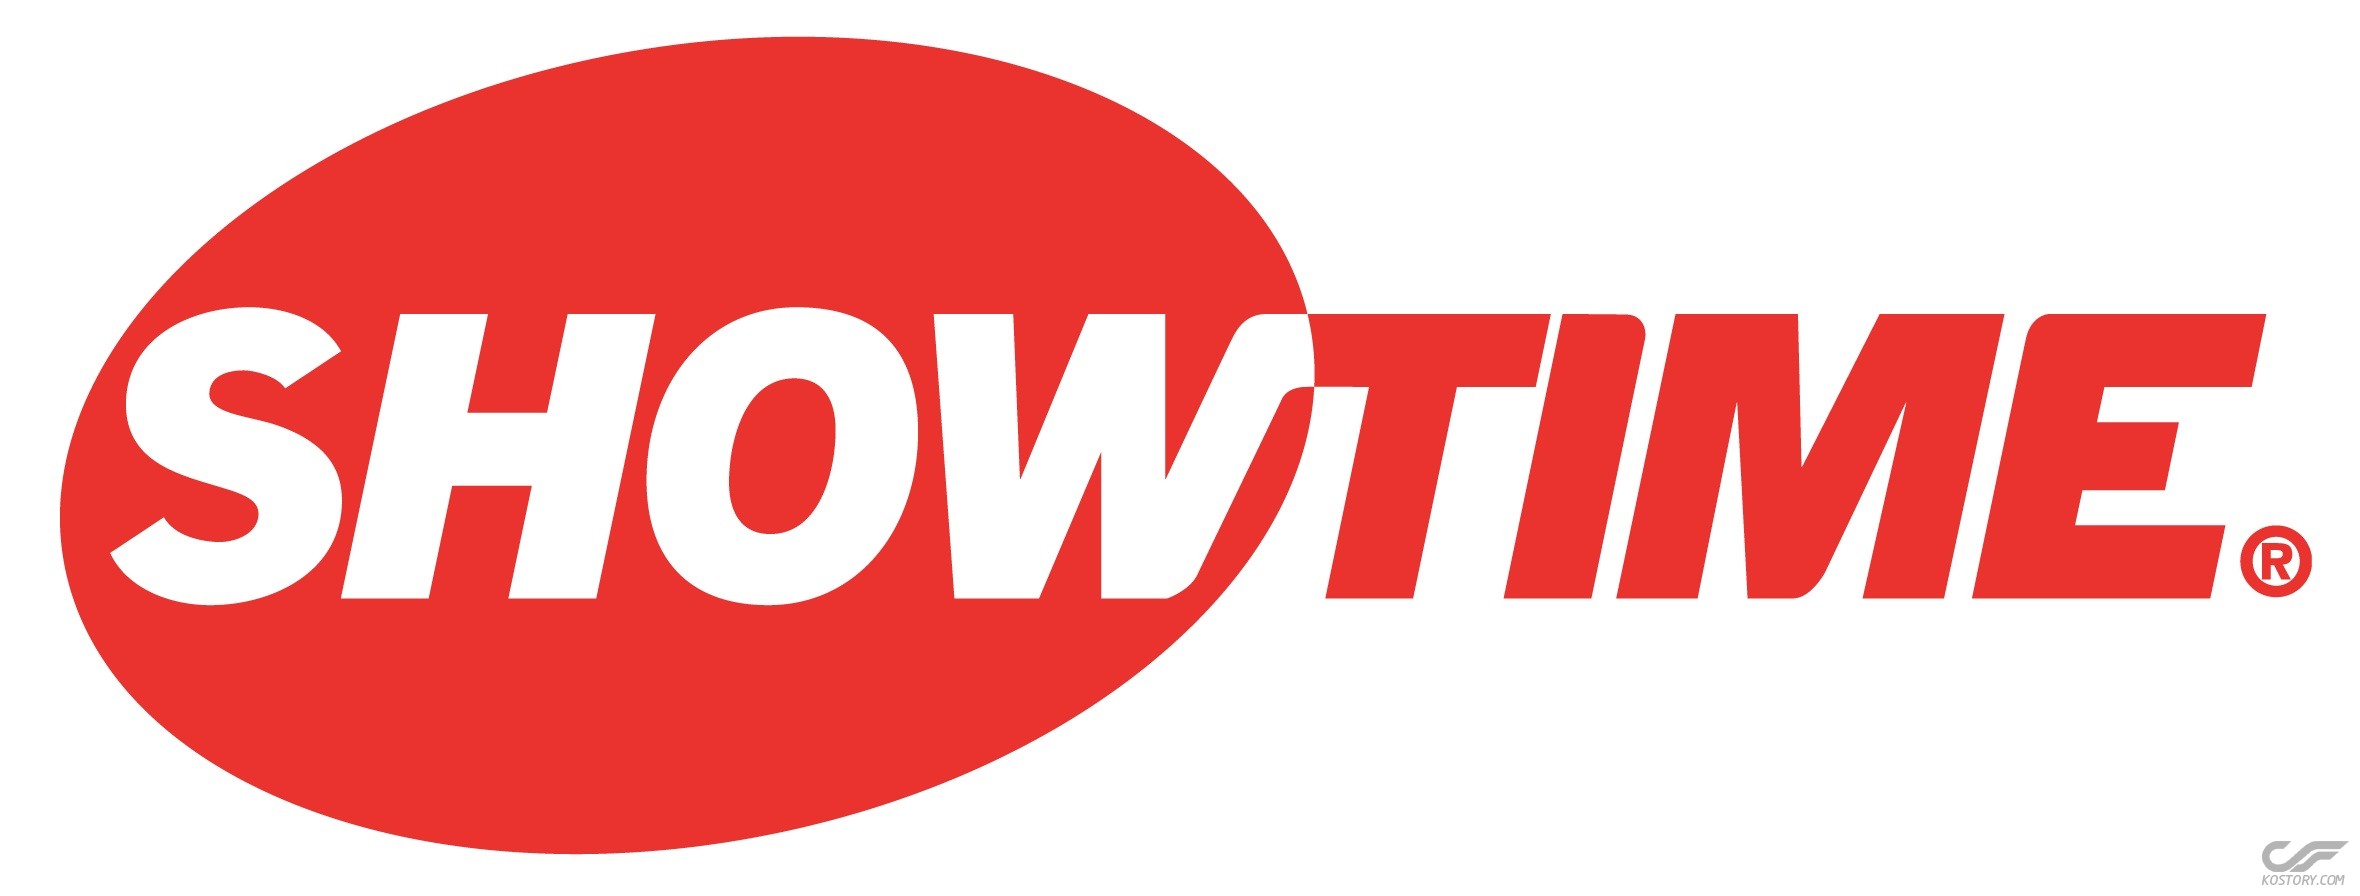 showtime-logo.jpg